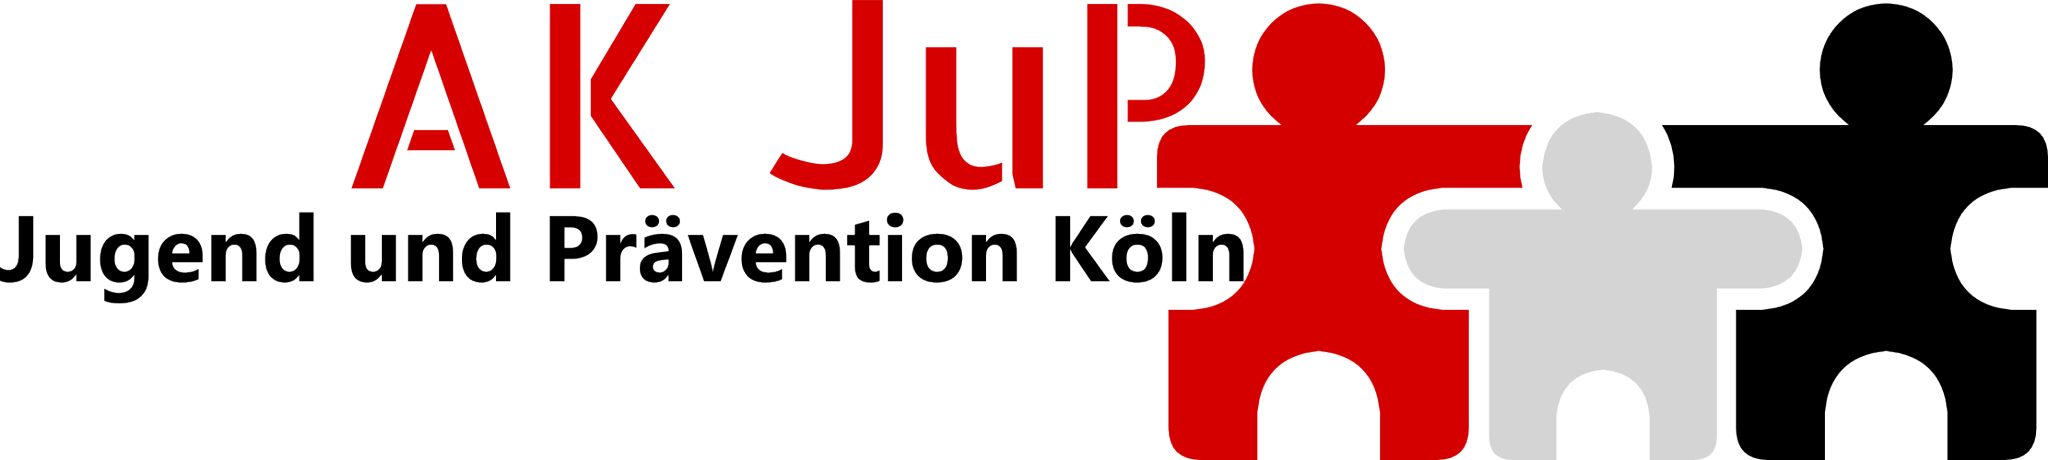 Logo AK JUP